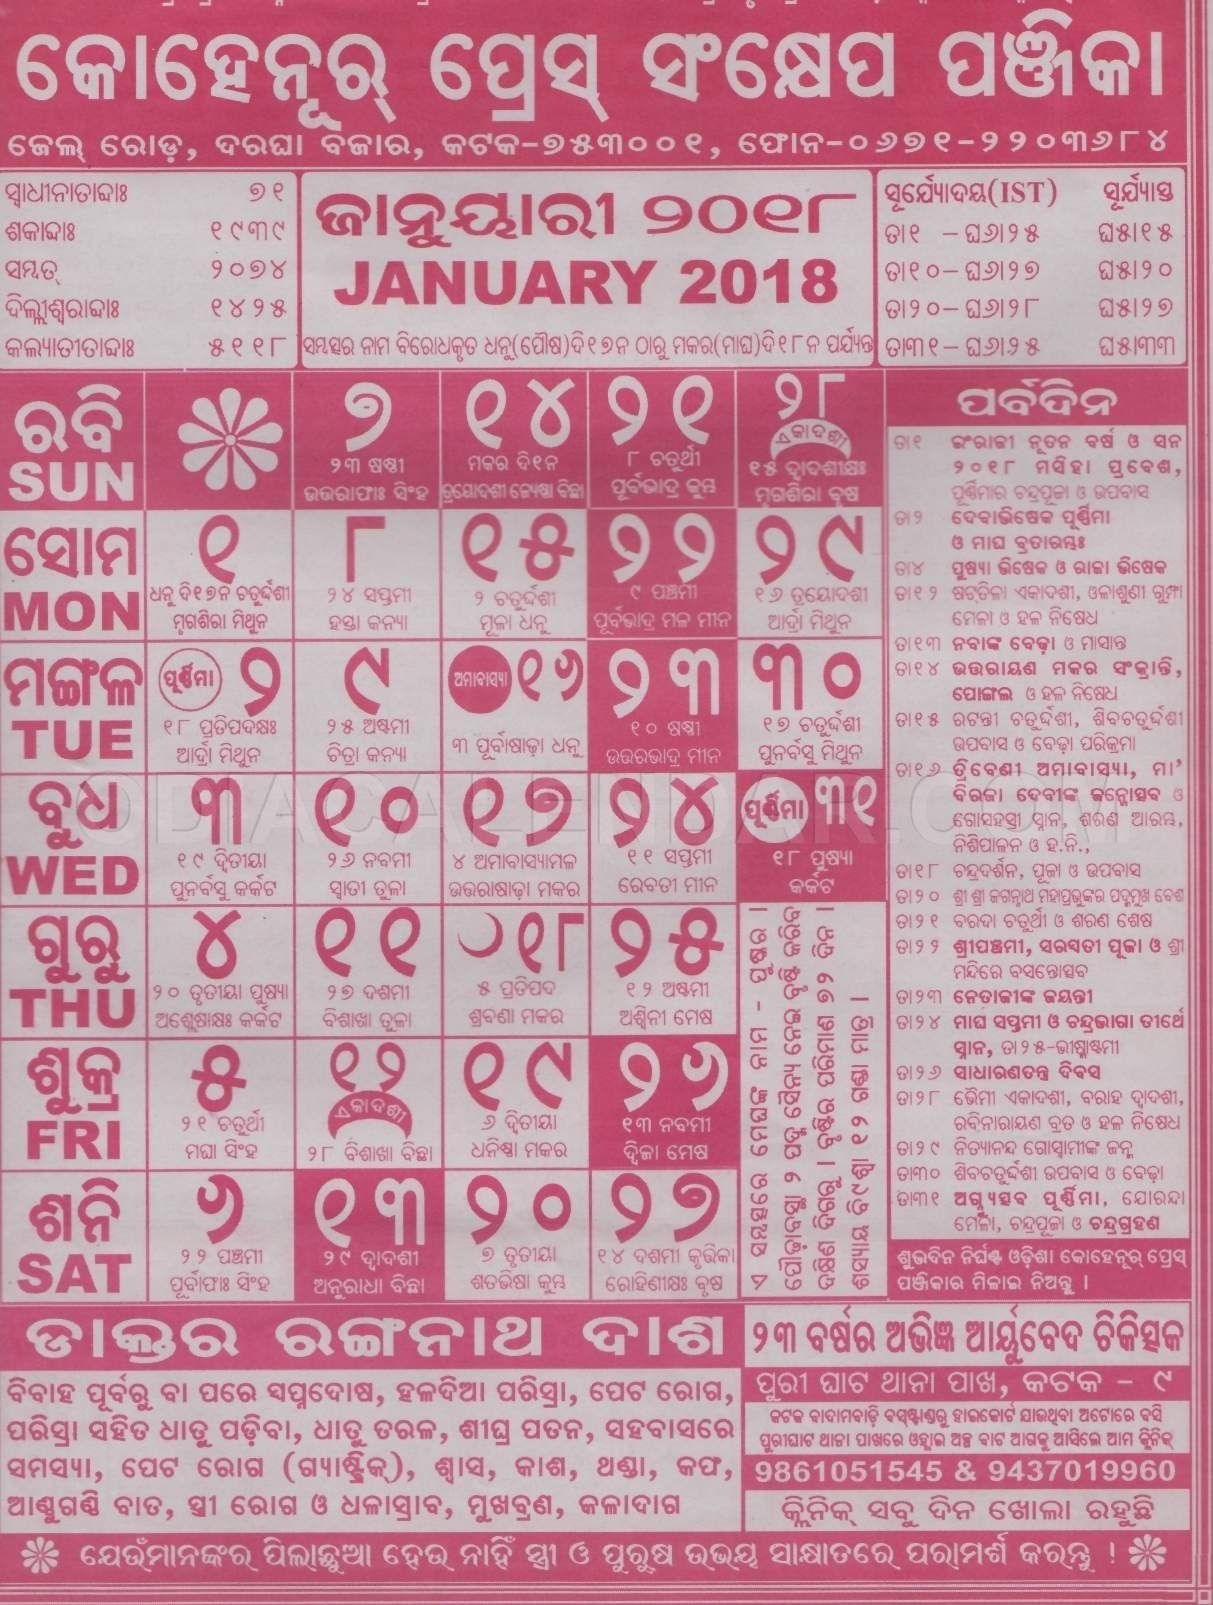 20+ Calendar 2021 Odia - Free Download Printable Calendar Templates ️ Odia Calendar 2021 October Month